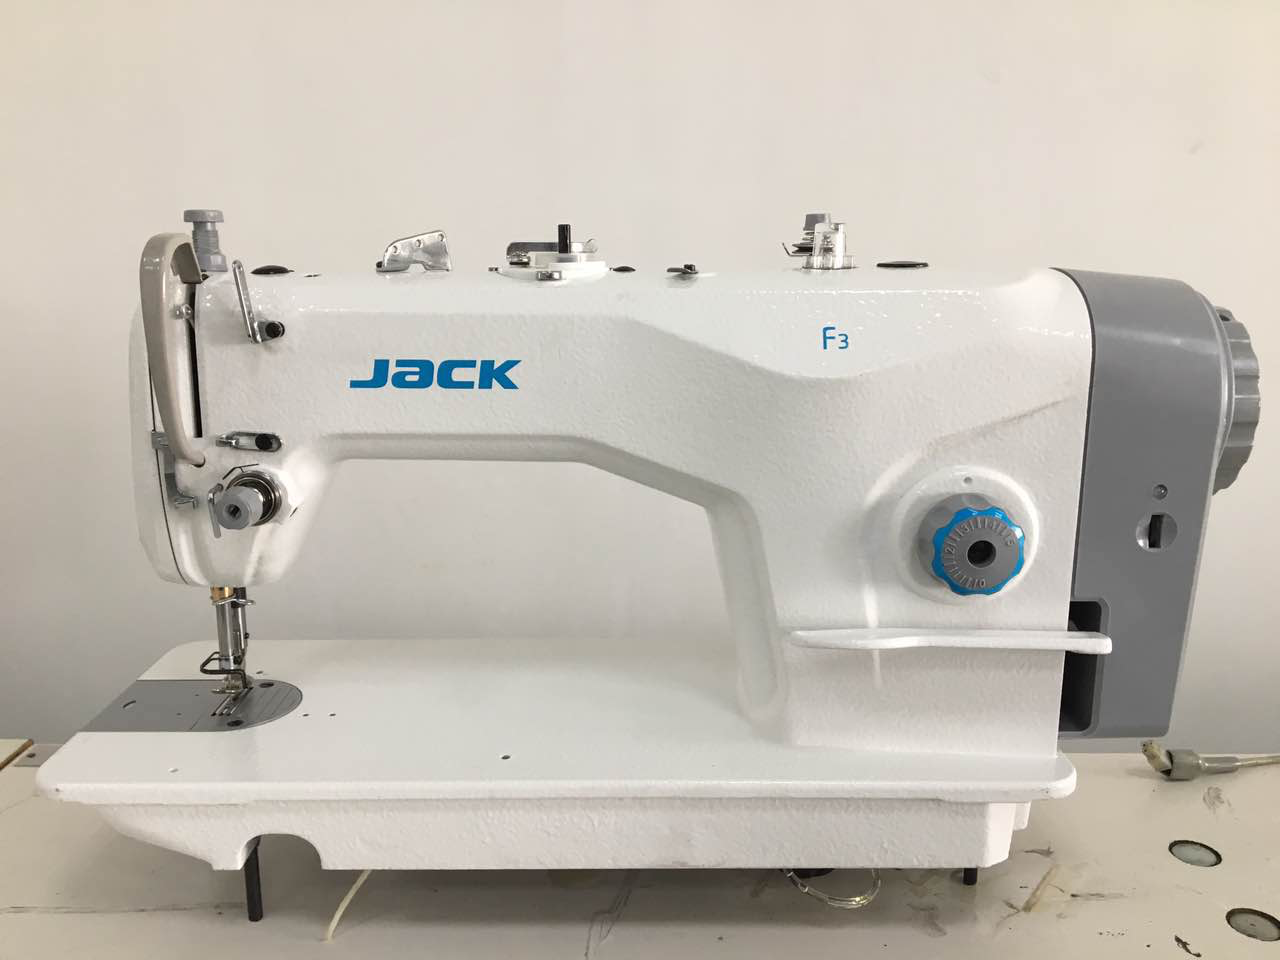 Jack JK-F3 Швейная машина